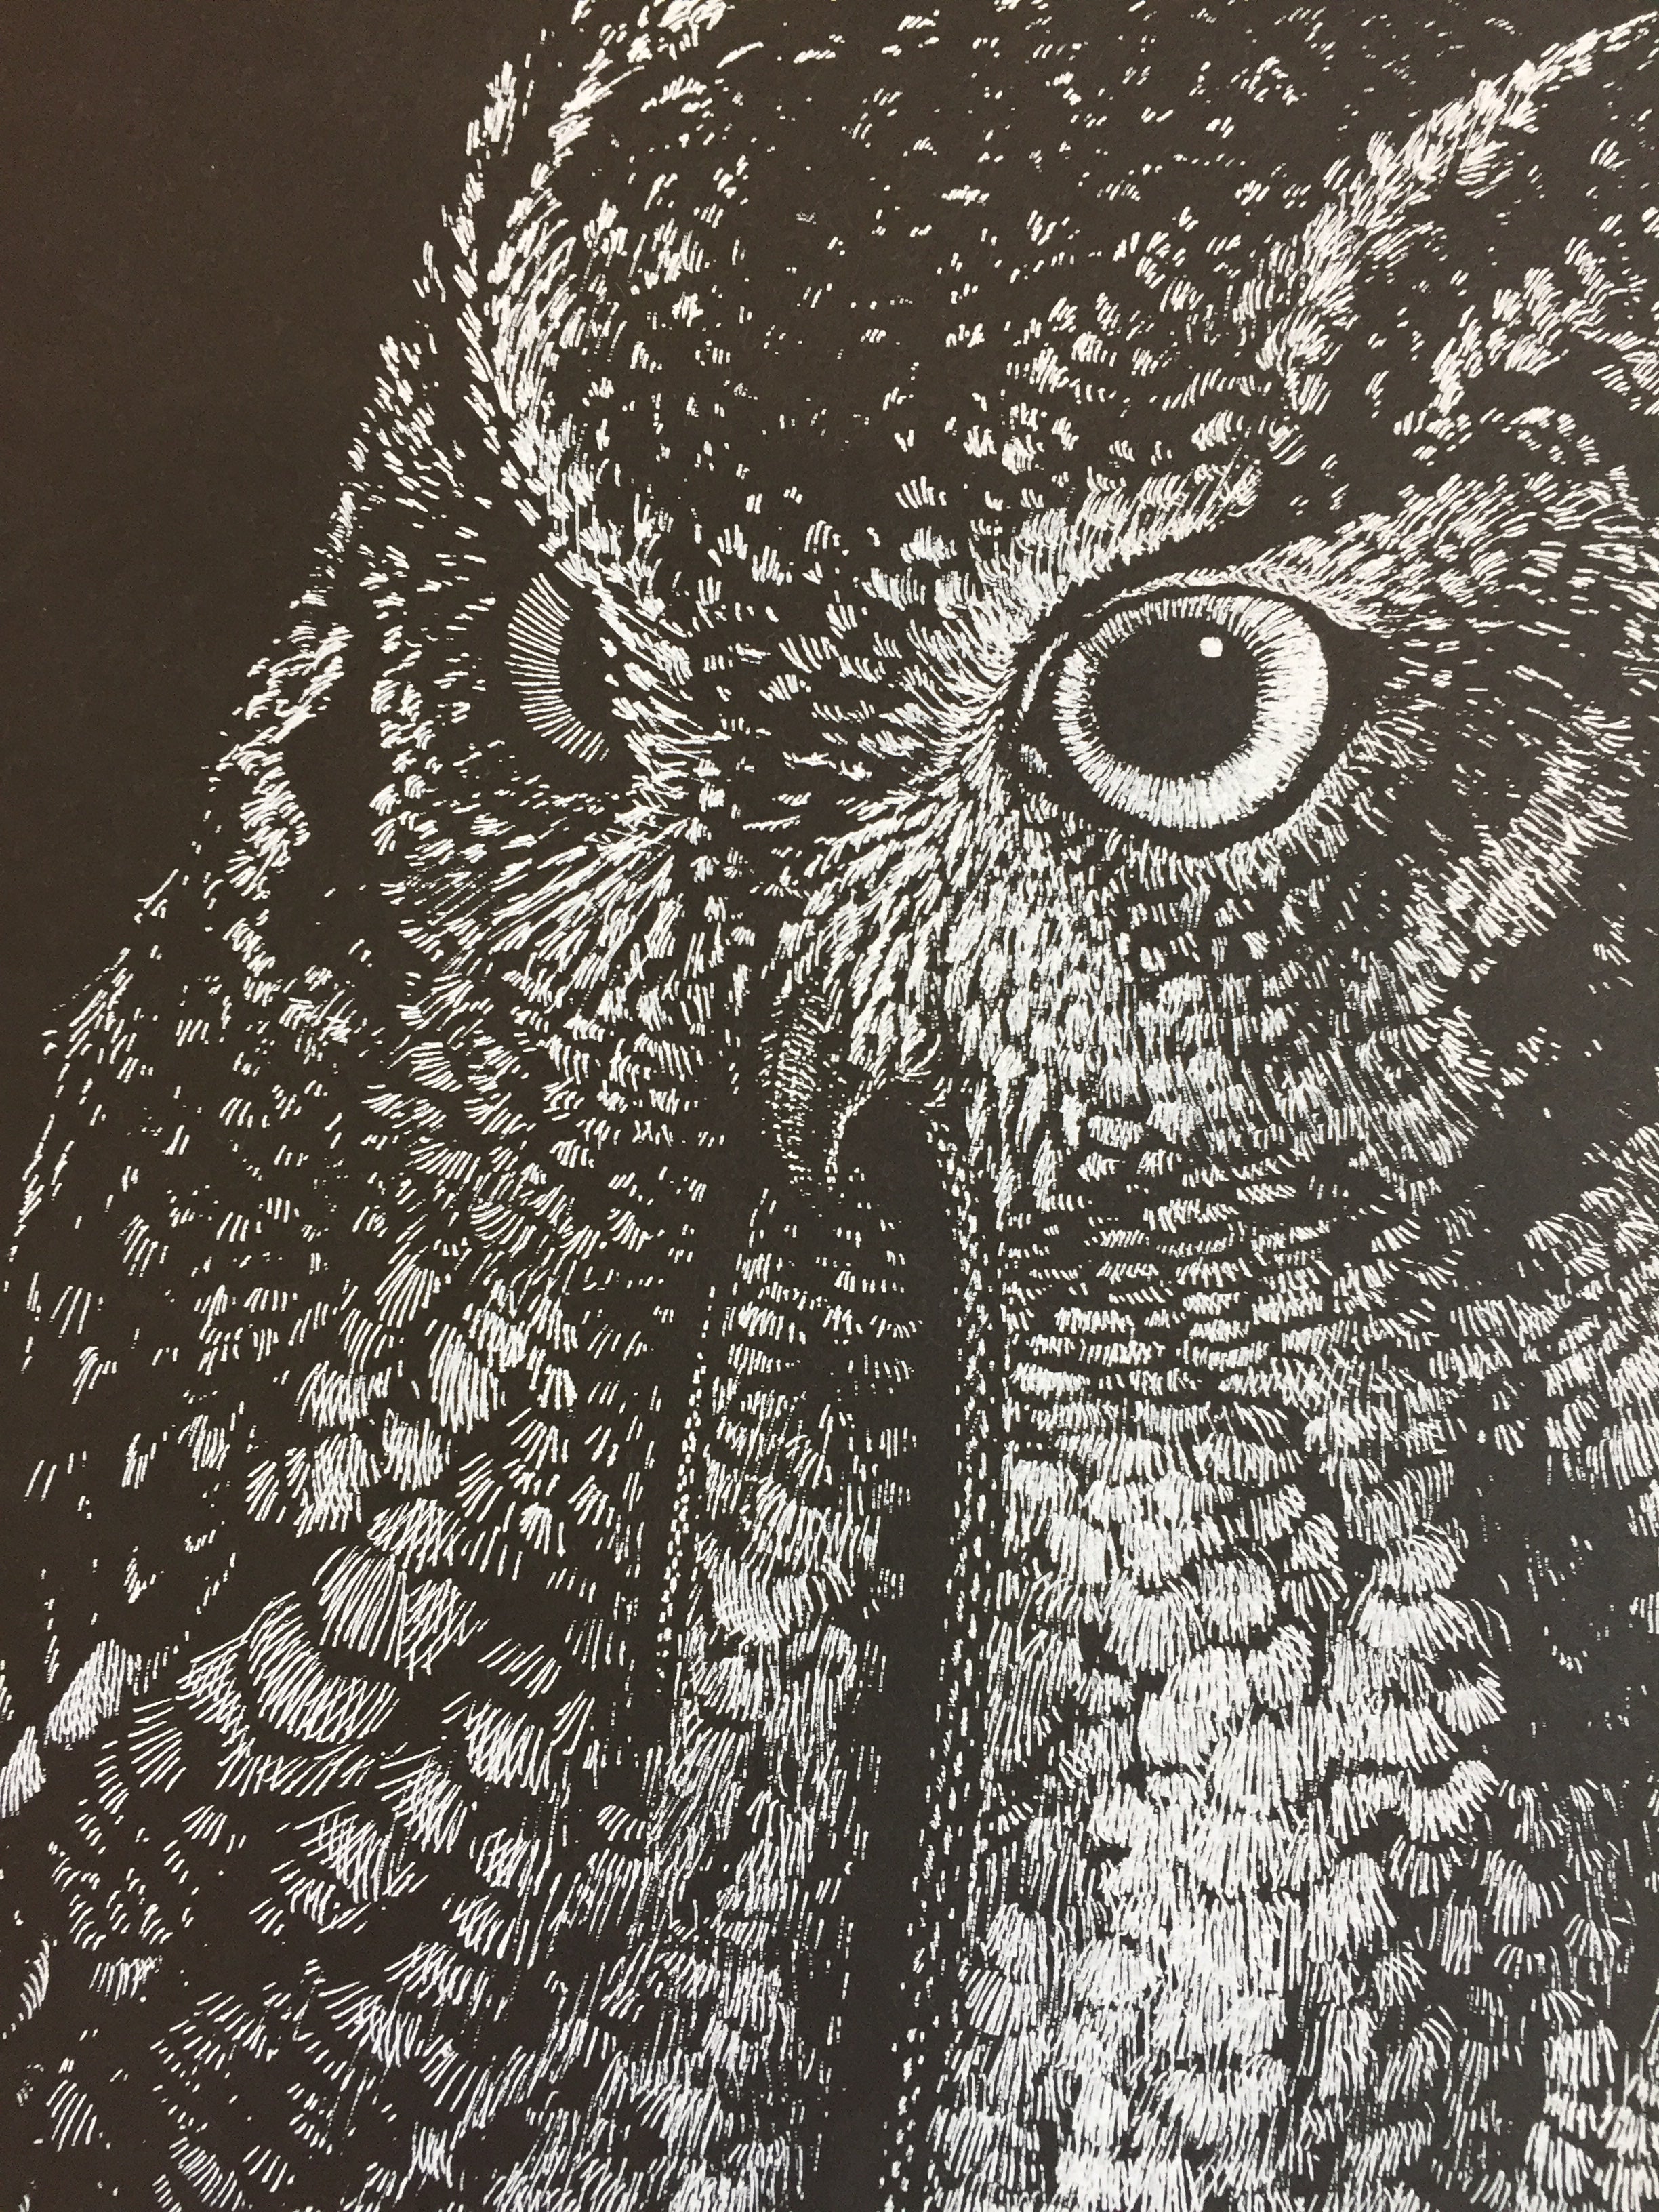 "Owl" by Janta Island